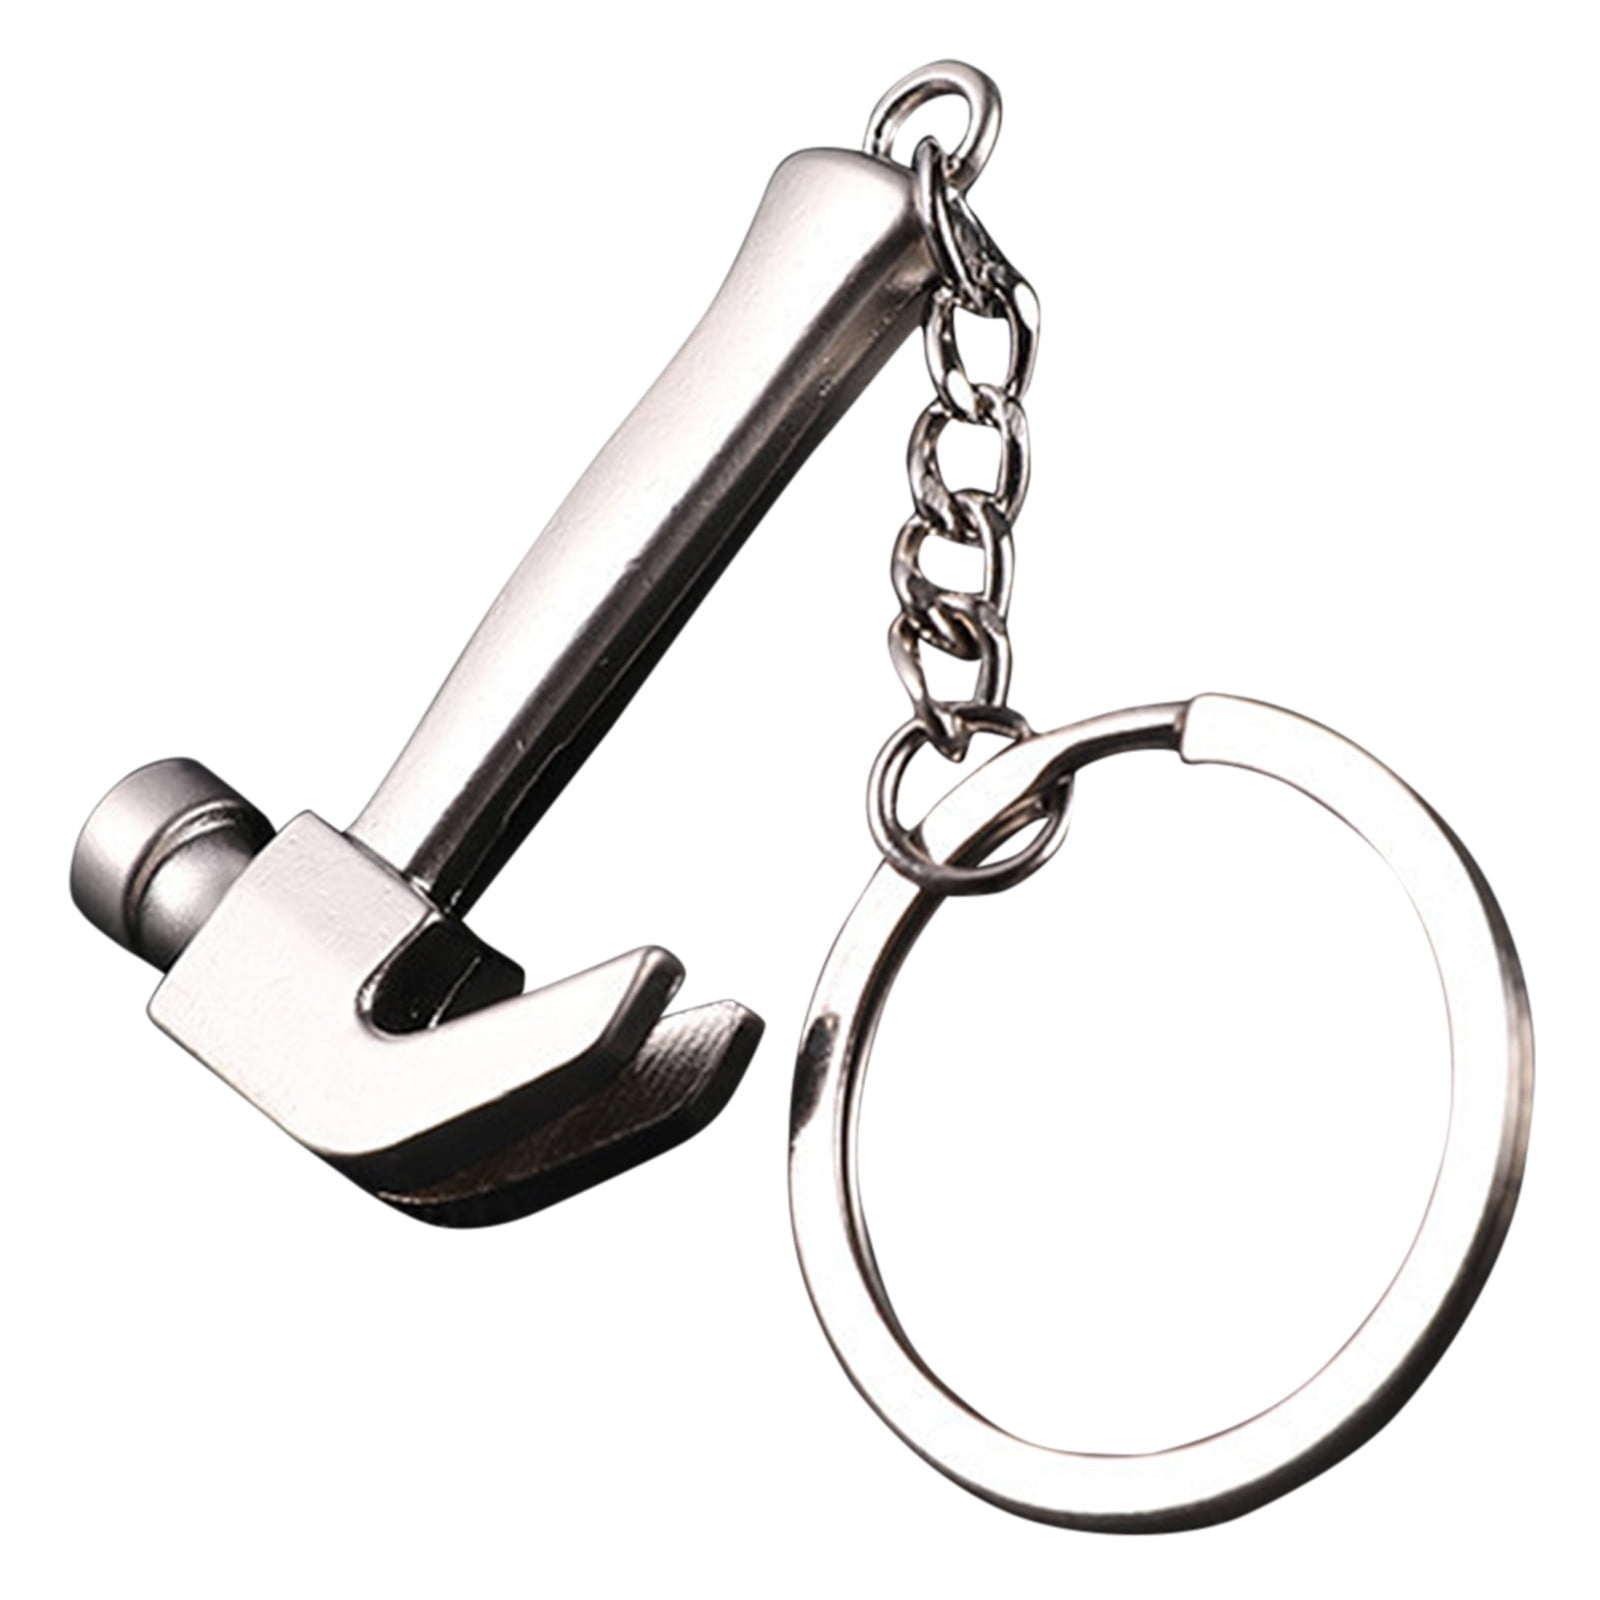 Mini Metal Adjustable Creative Tool Wrench Spanner Key Chain Ring Keyring 